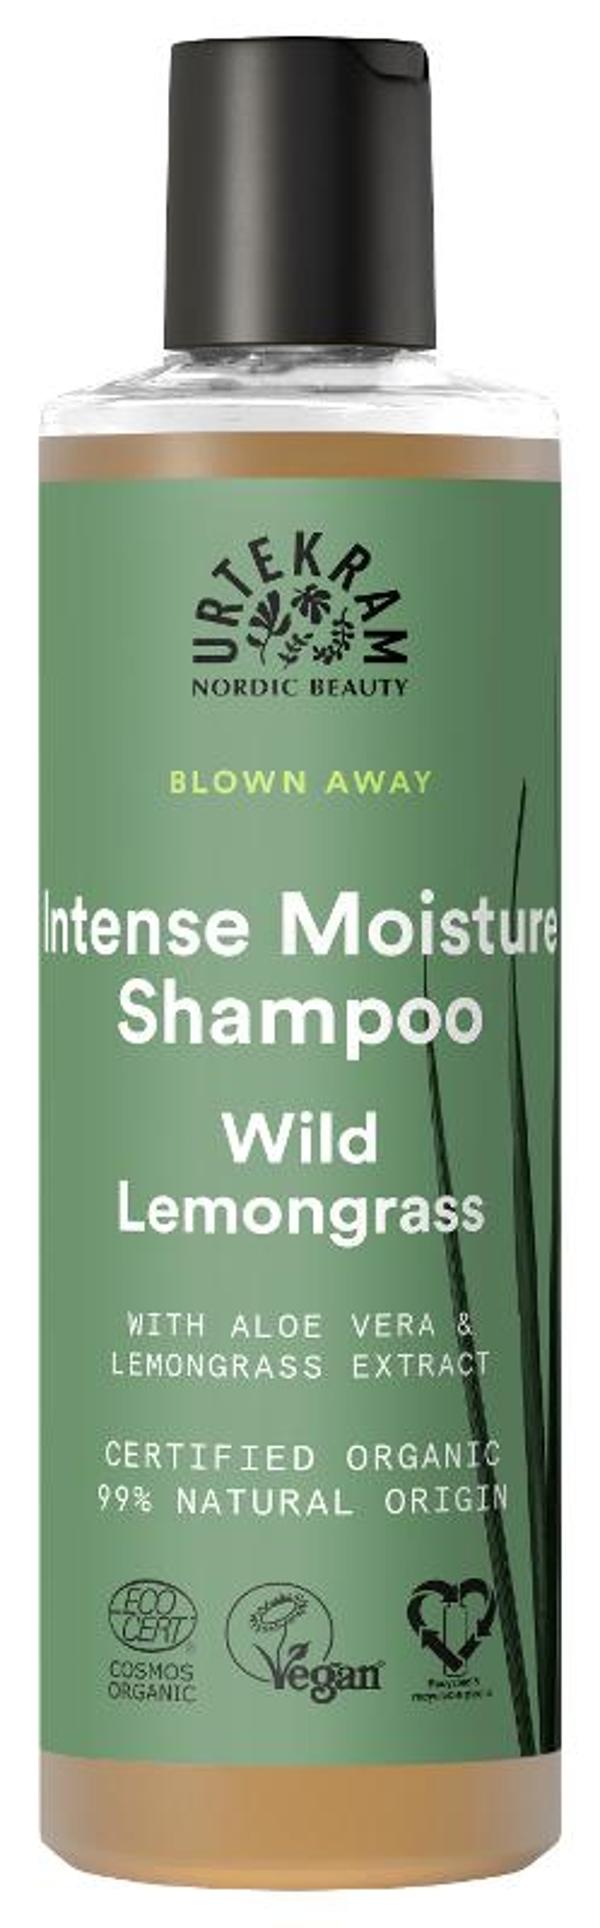 Produktfoto zu Shampoo Wild Lemongrass, 250ml